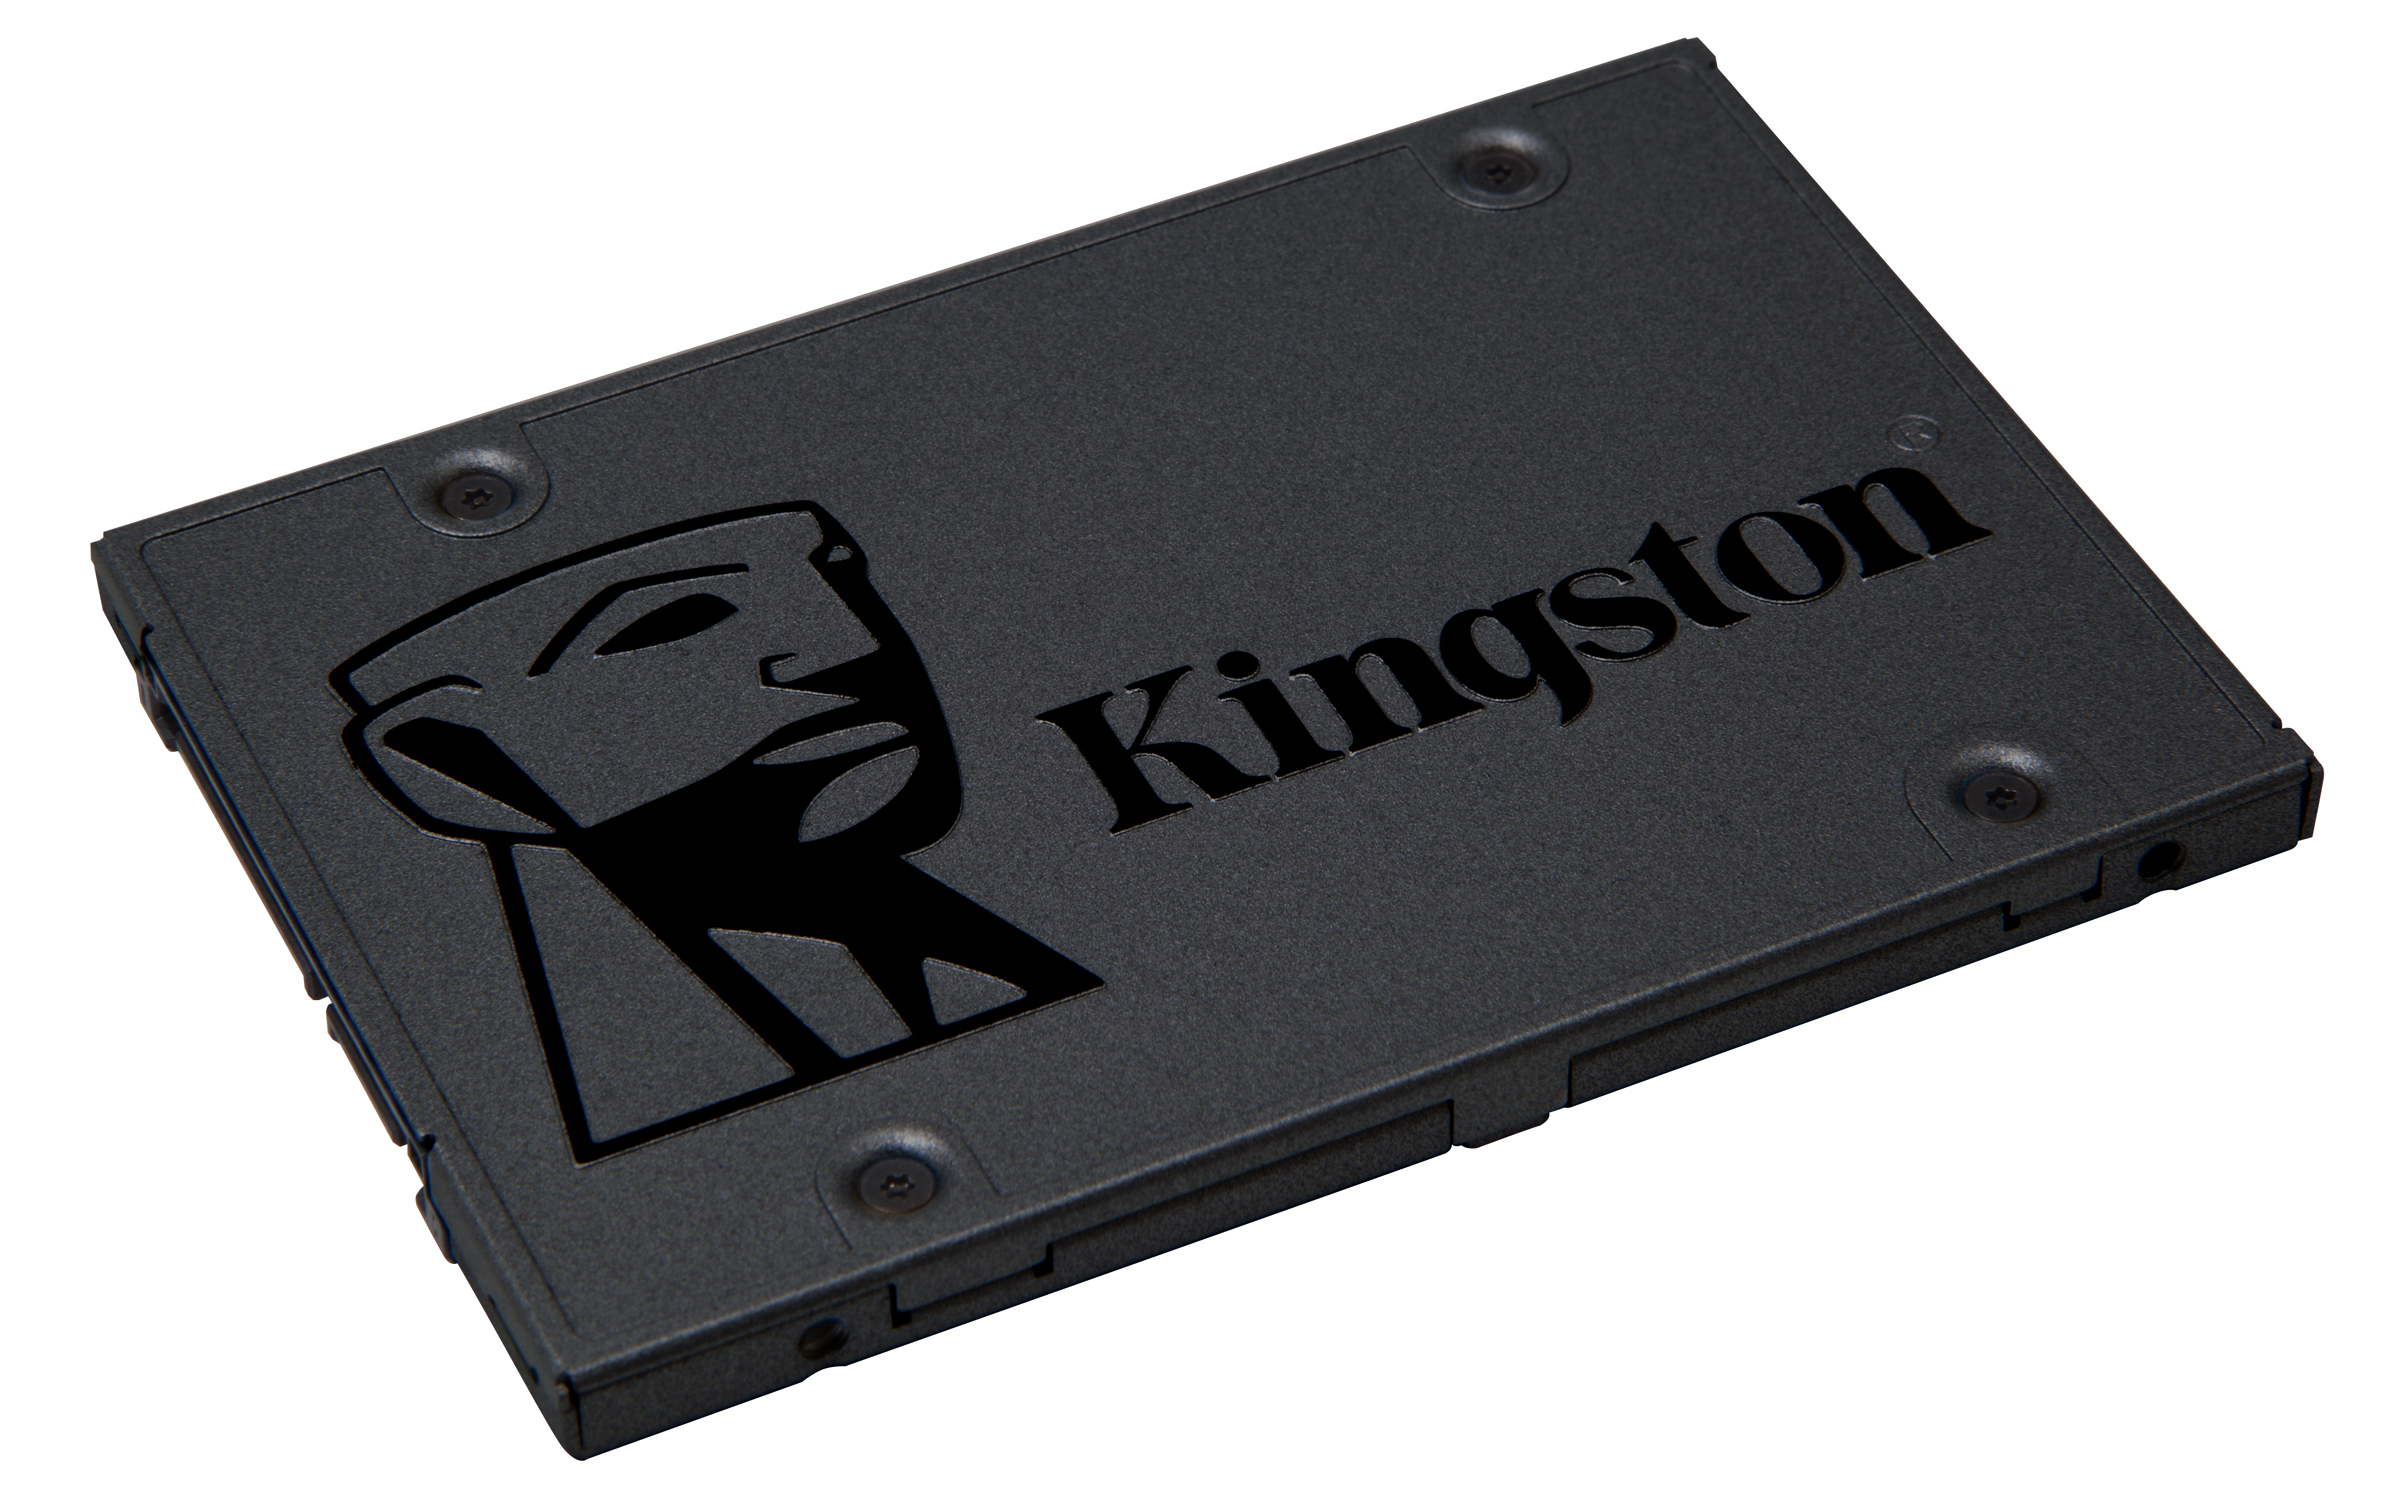 KINGSTON SSD A400 480GB 2.5